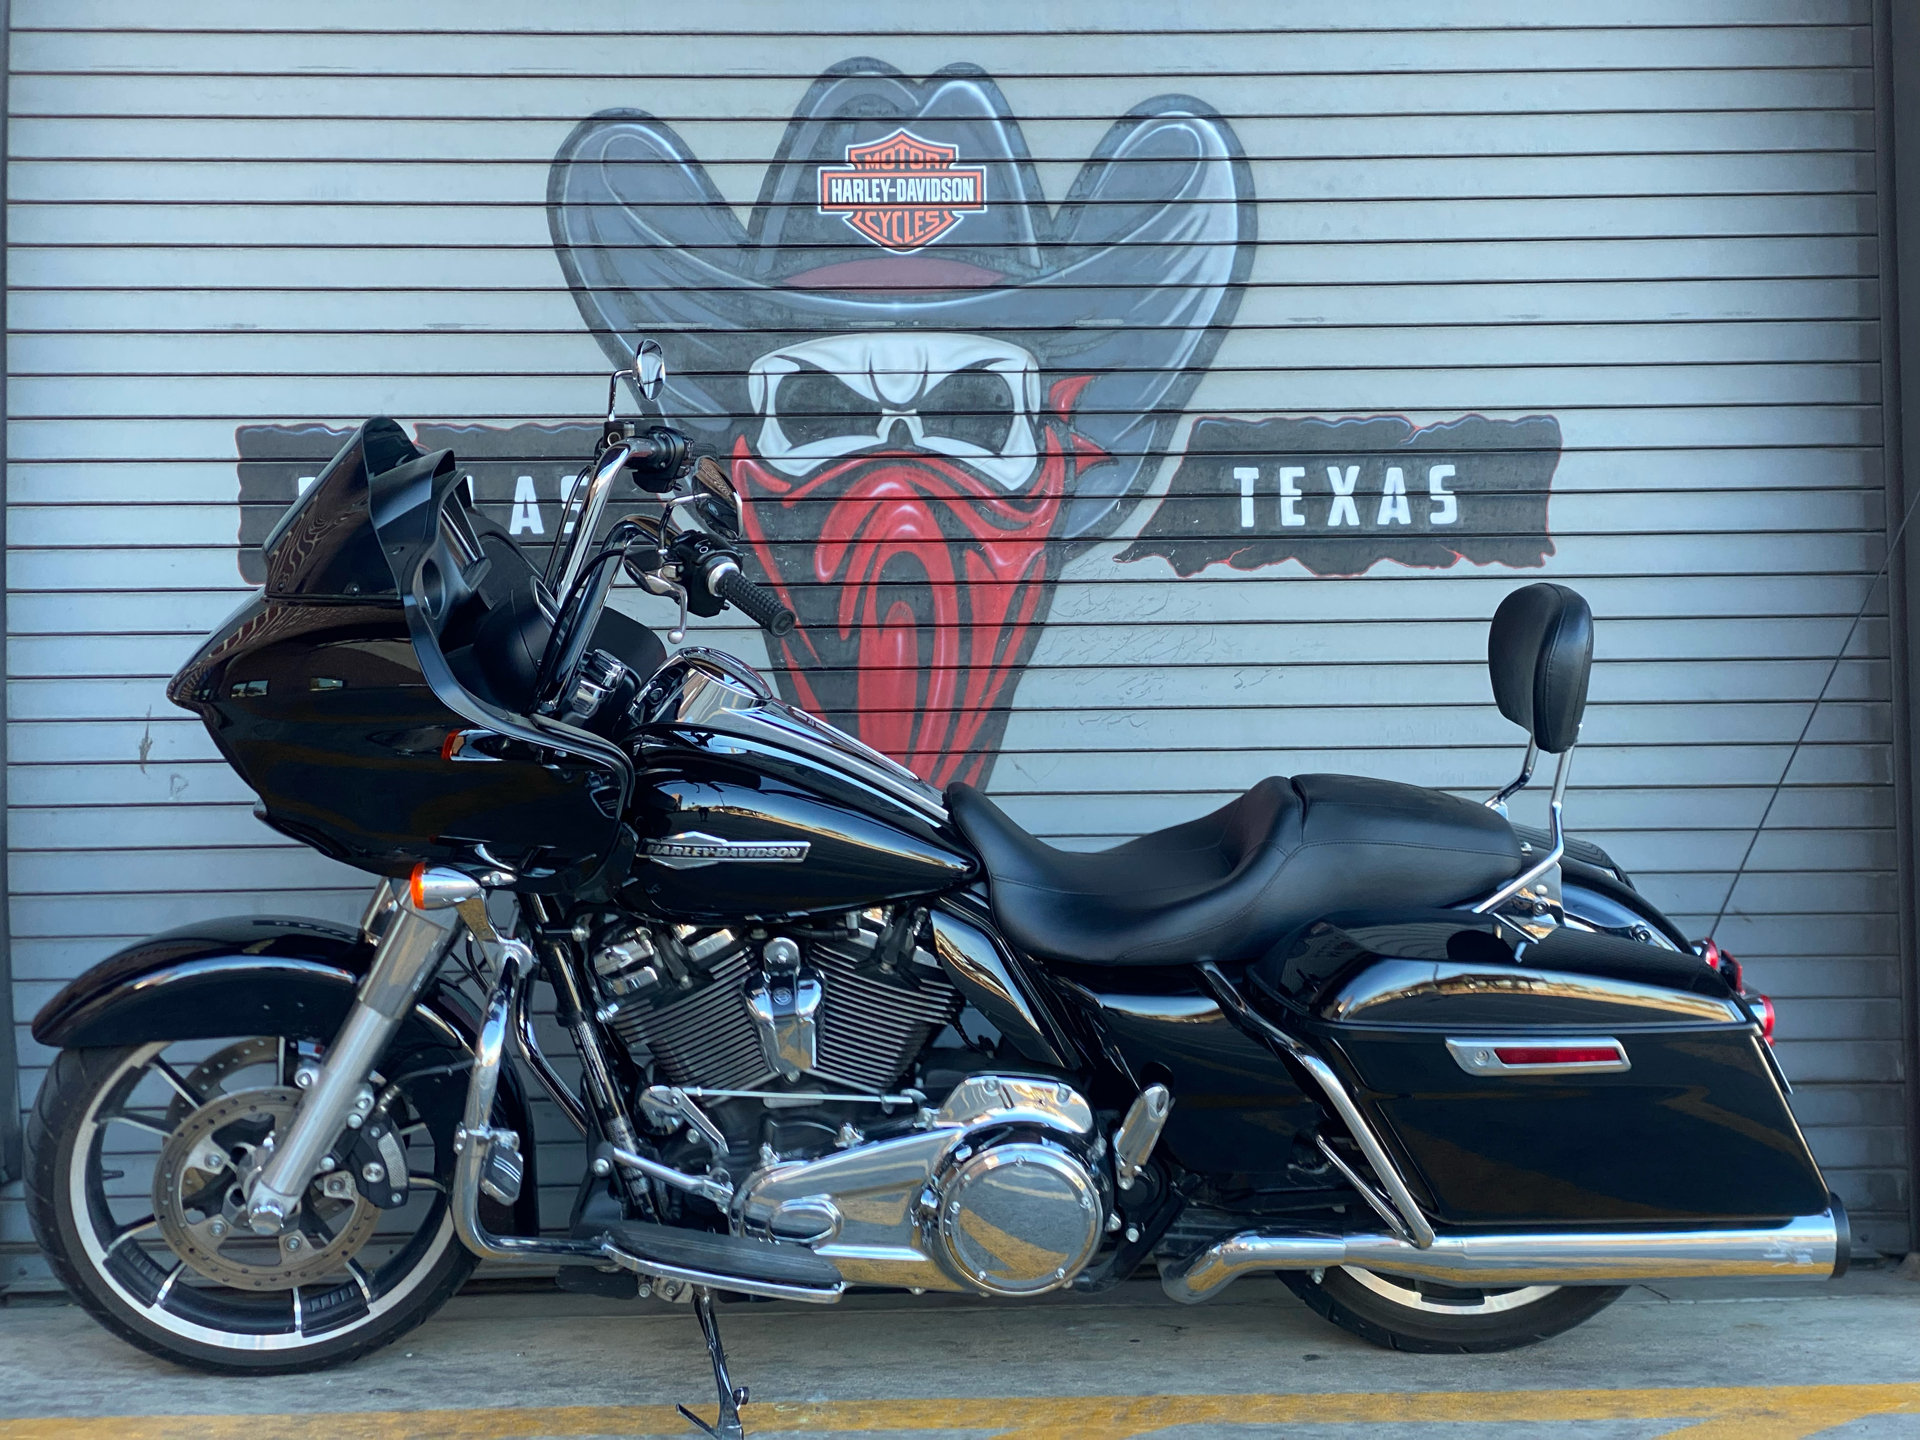 2021 Harley-Davidson Road Glide® in Carrollton, Texas - Photo 11